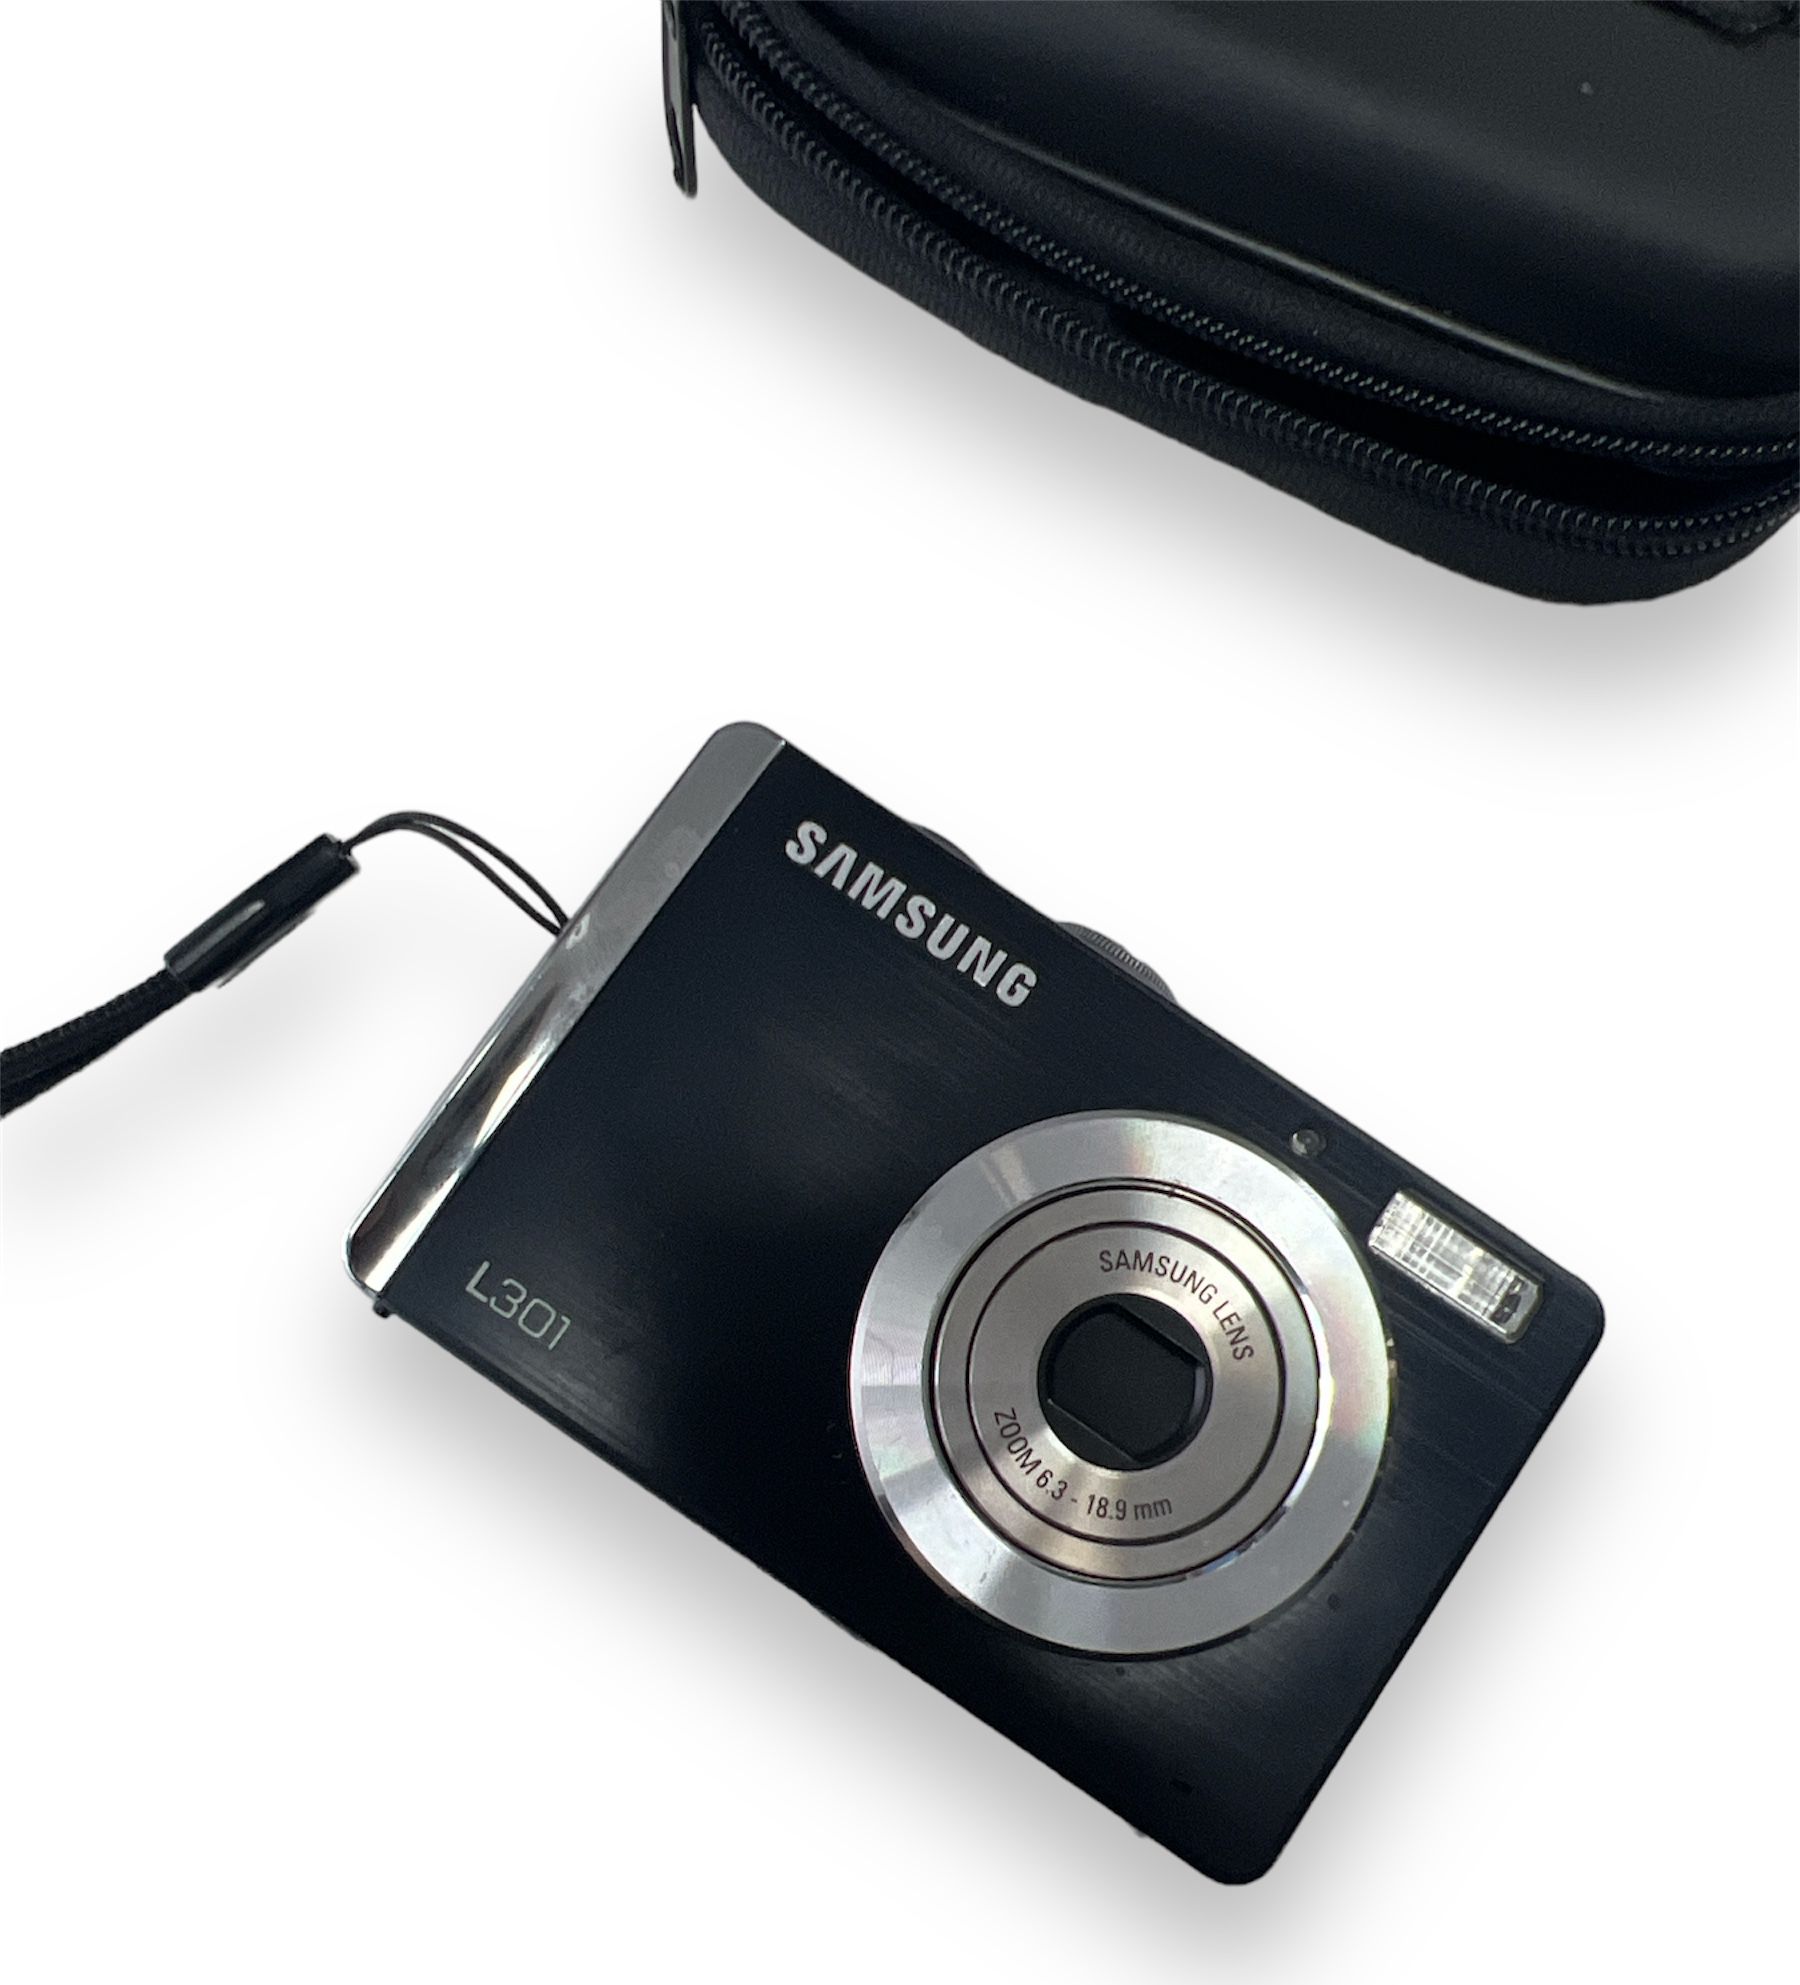 Samsung 1301 compact camera